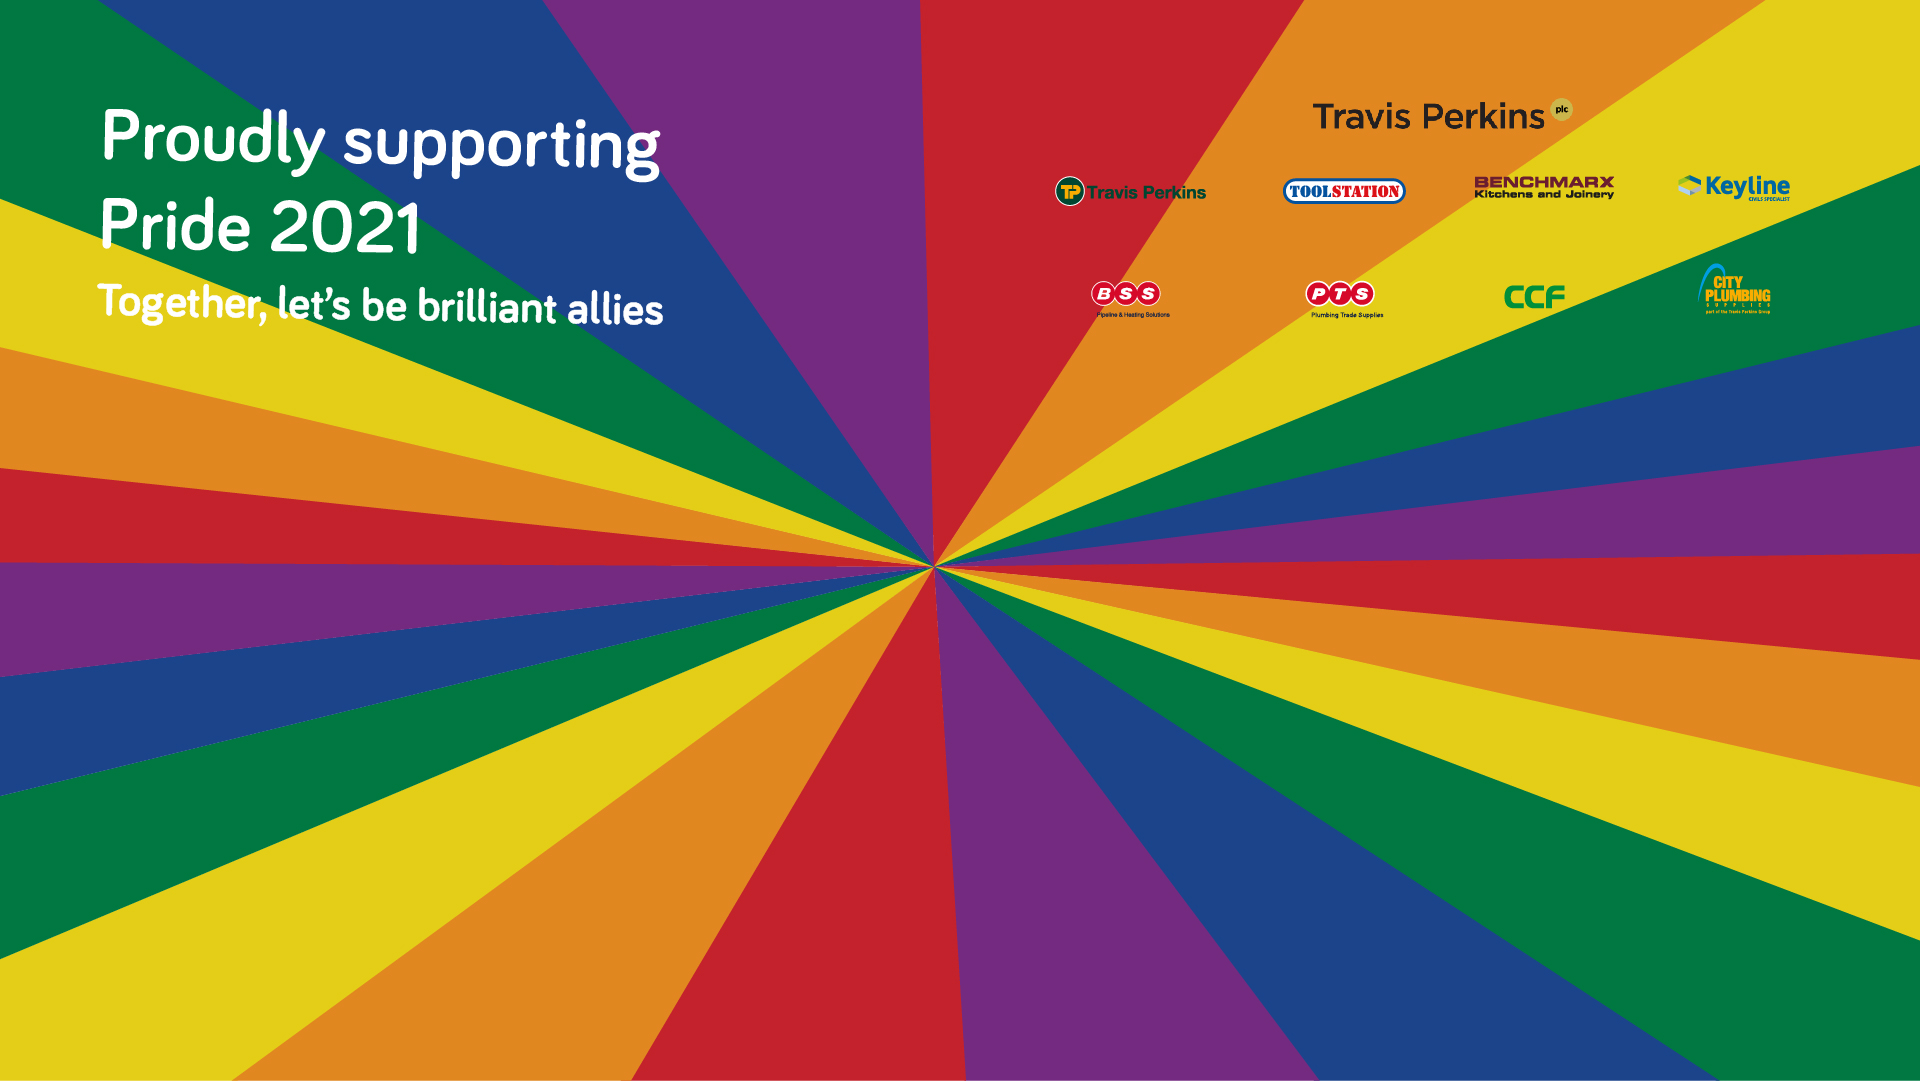 travis-perkins-plc-celebrates-pride-month-to-improve-diversity-and-inclusion-labm